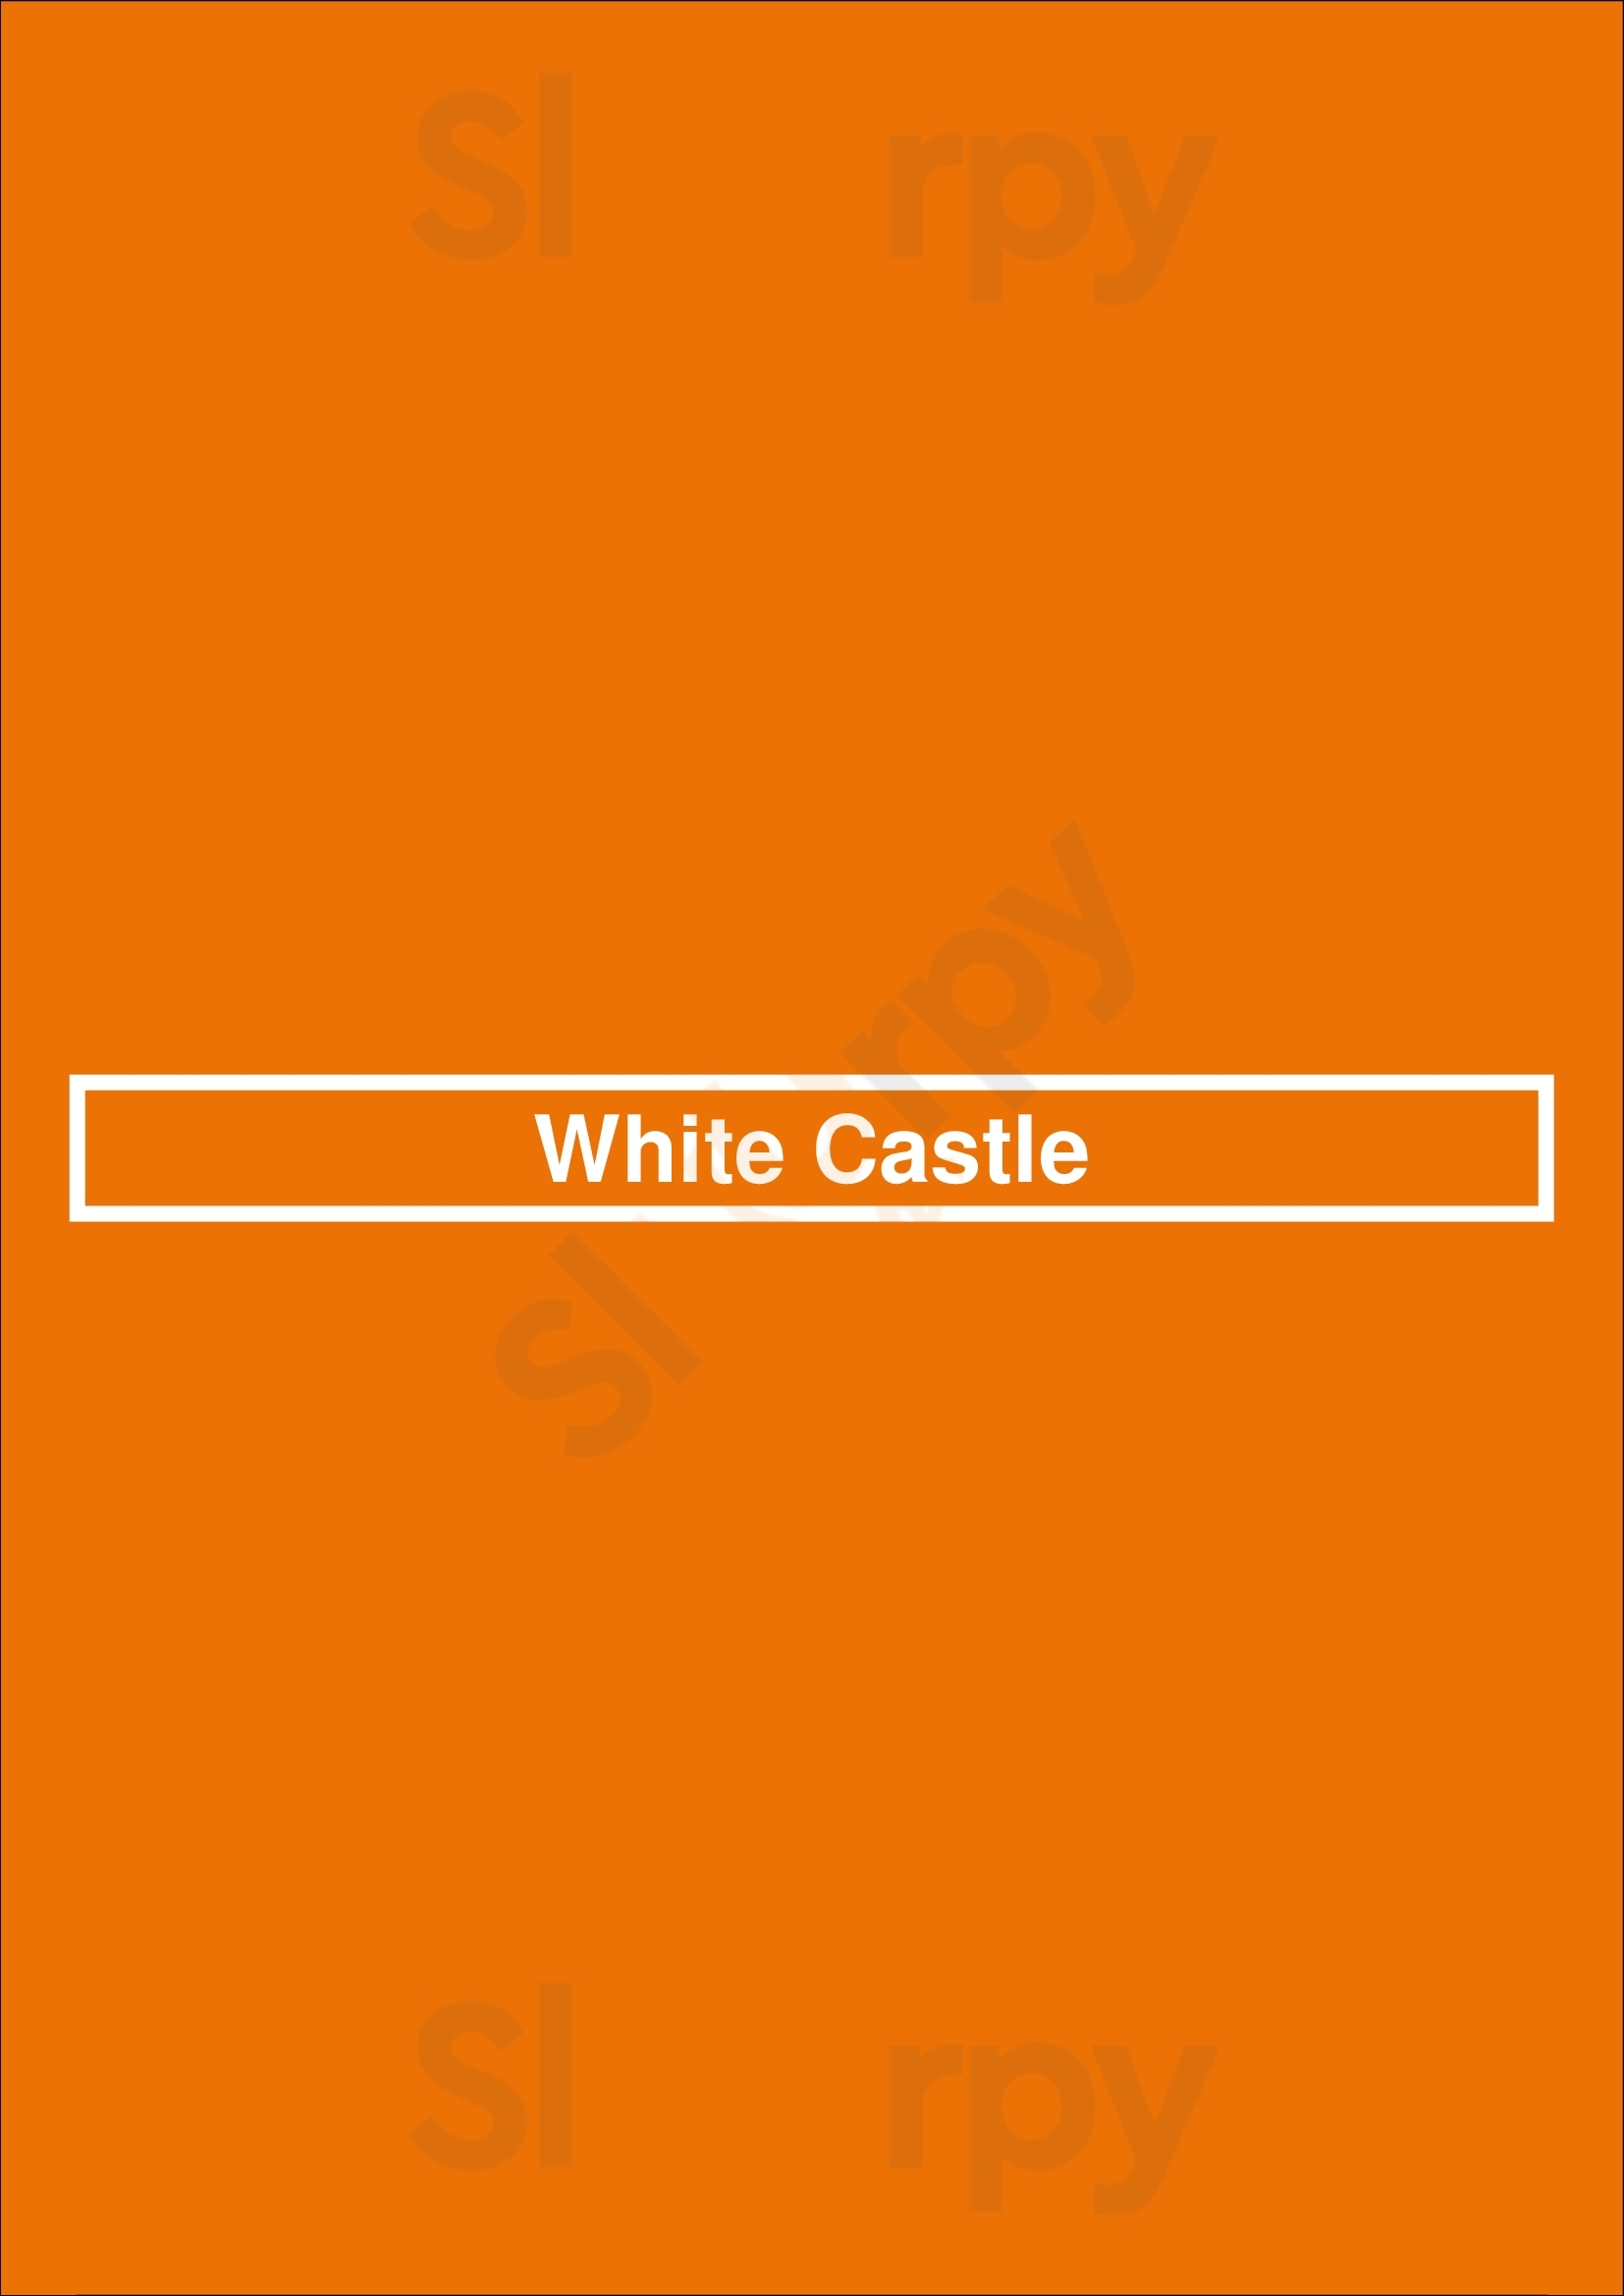 White Castle Louisville Menu - 1